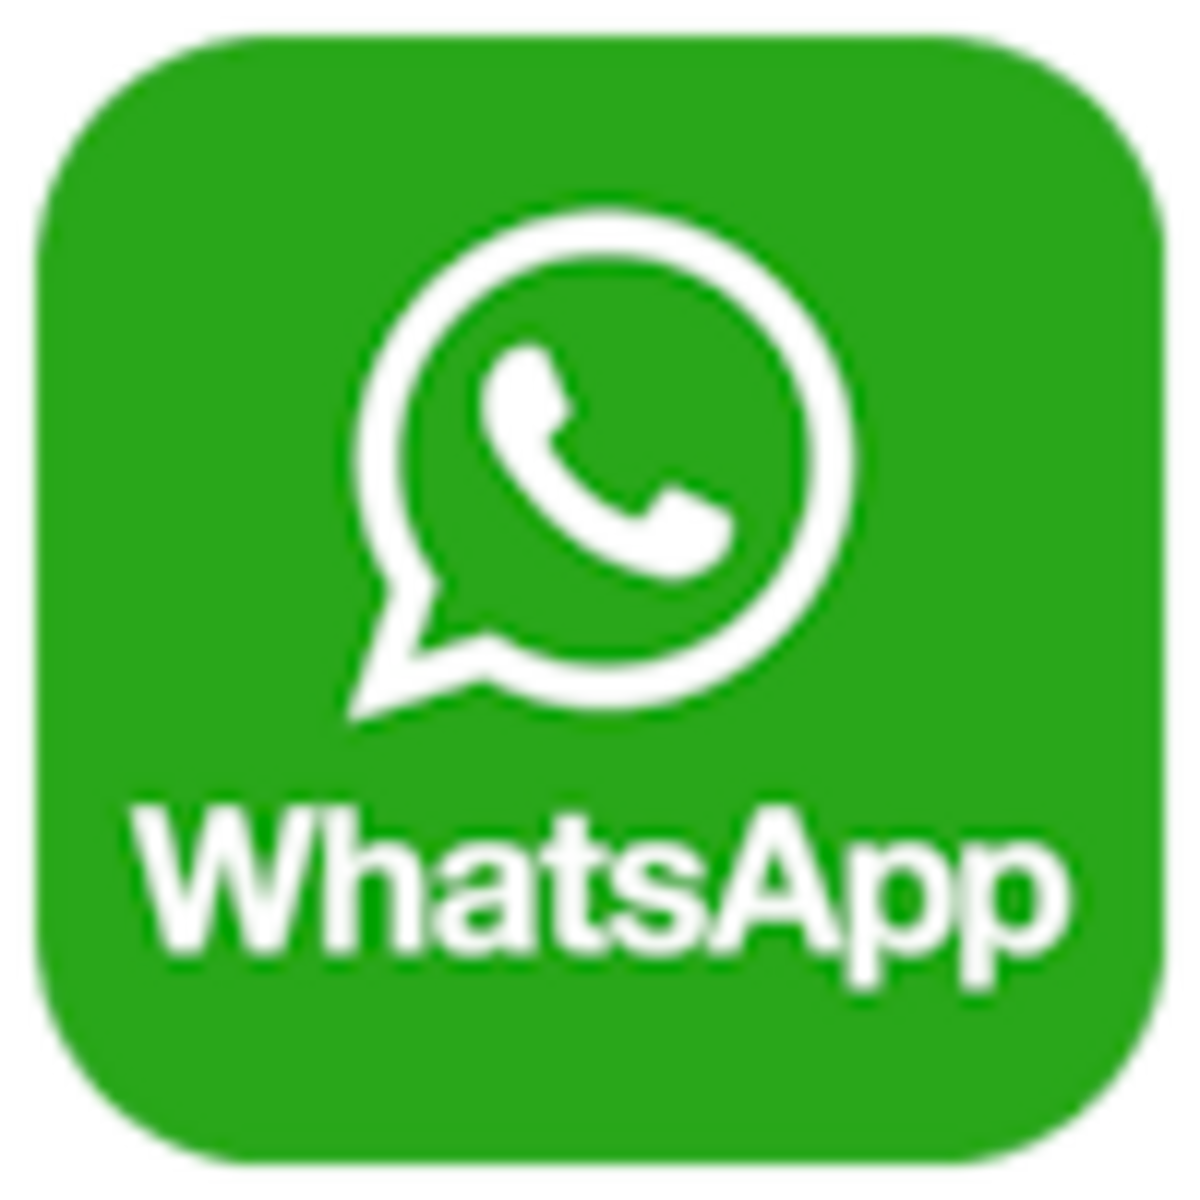 Send Vinuovo a message using Whatsapp